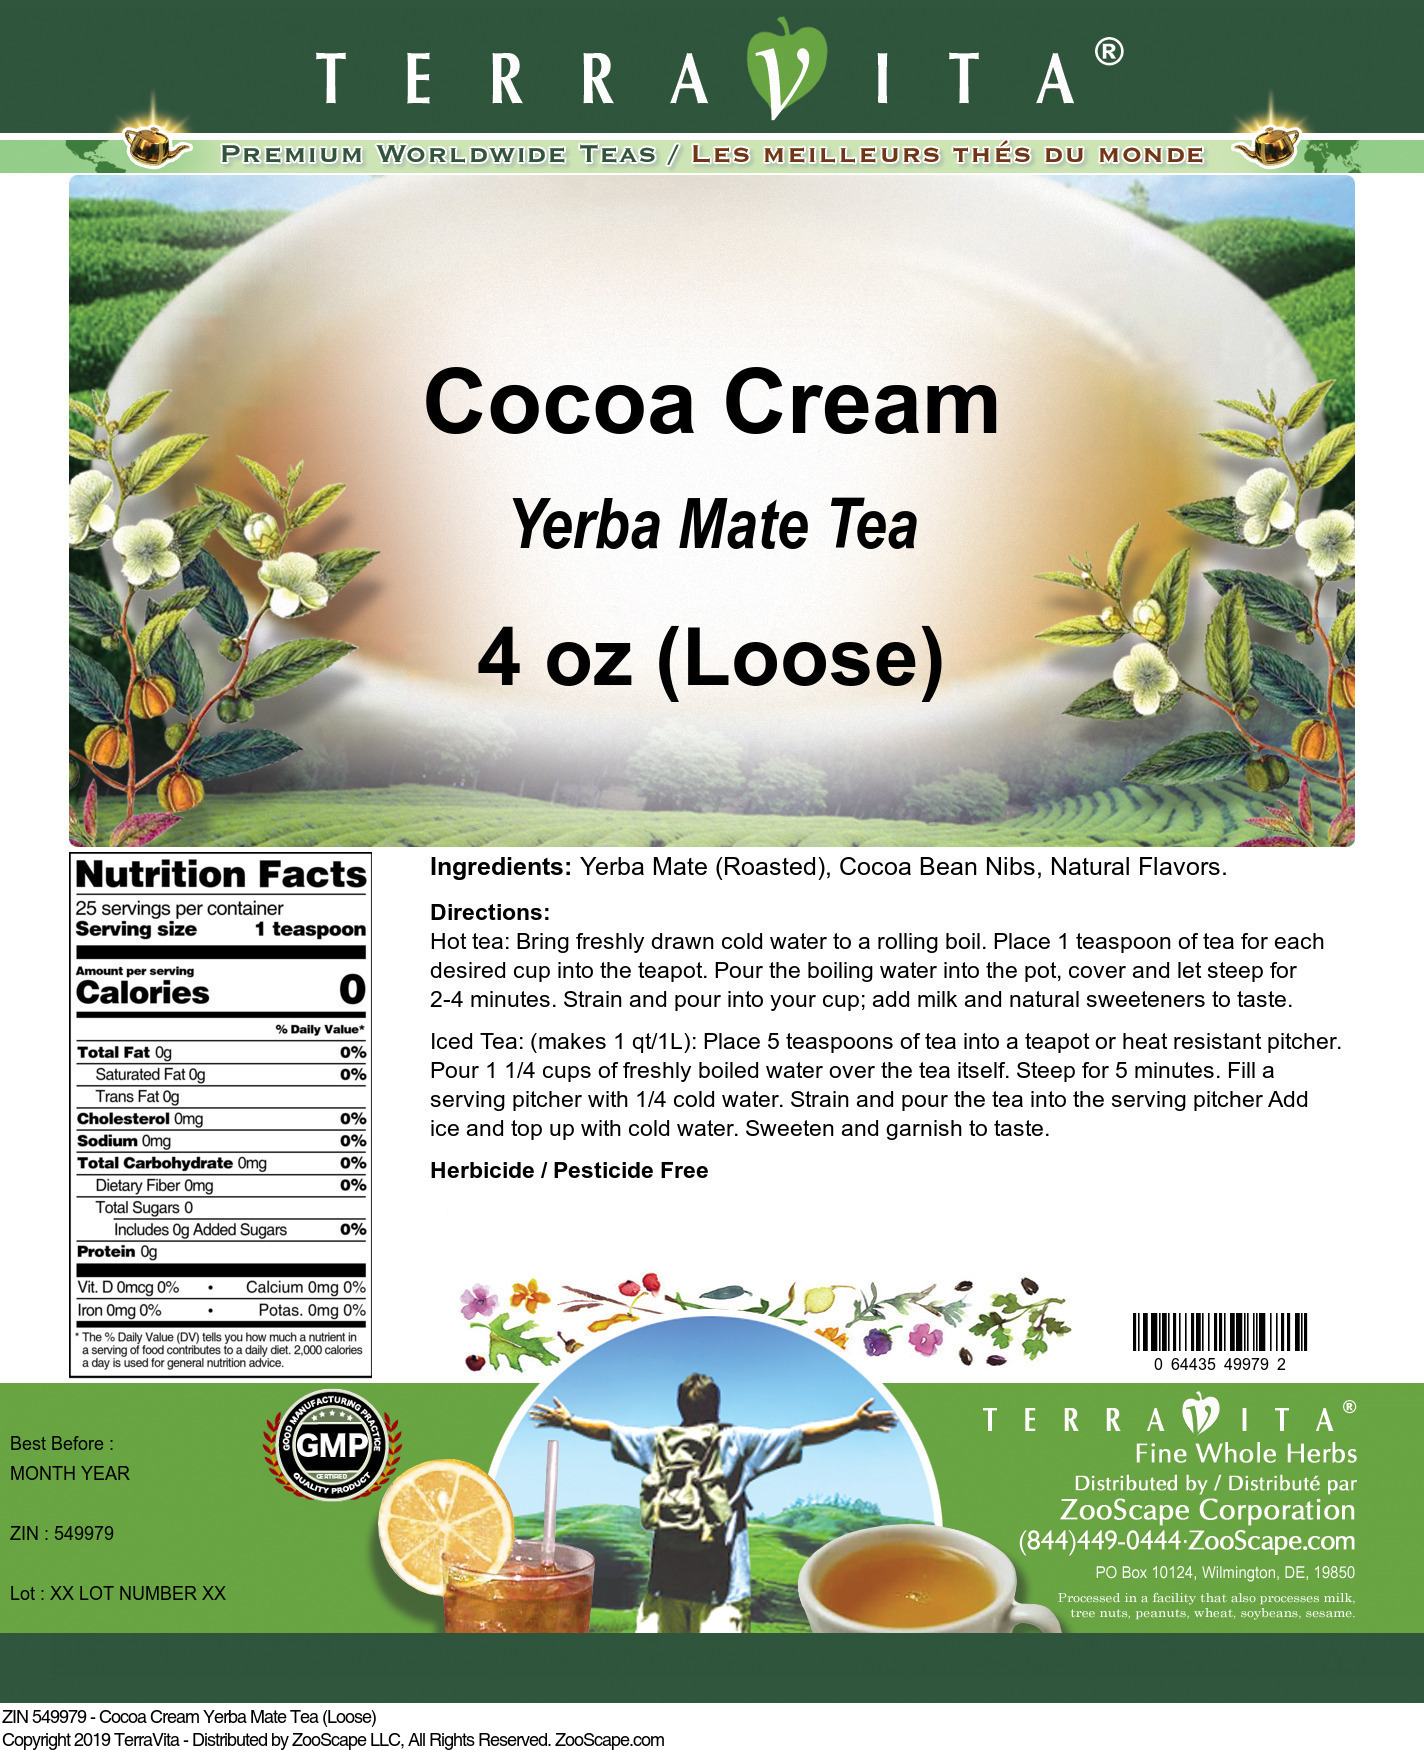 Cocoa Cream Yerba Mate Tea (Loose) - Label